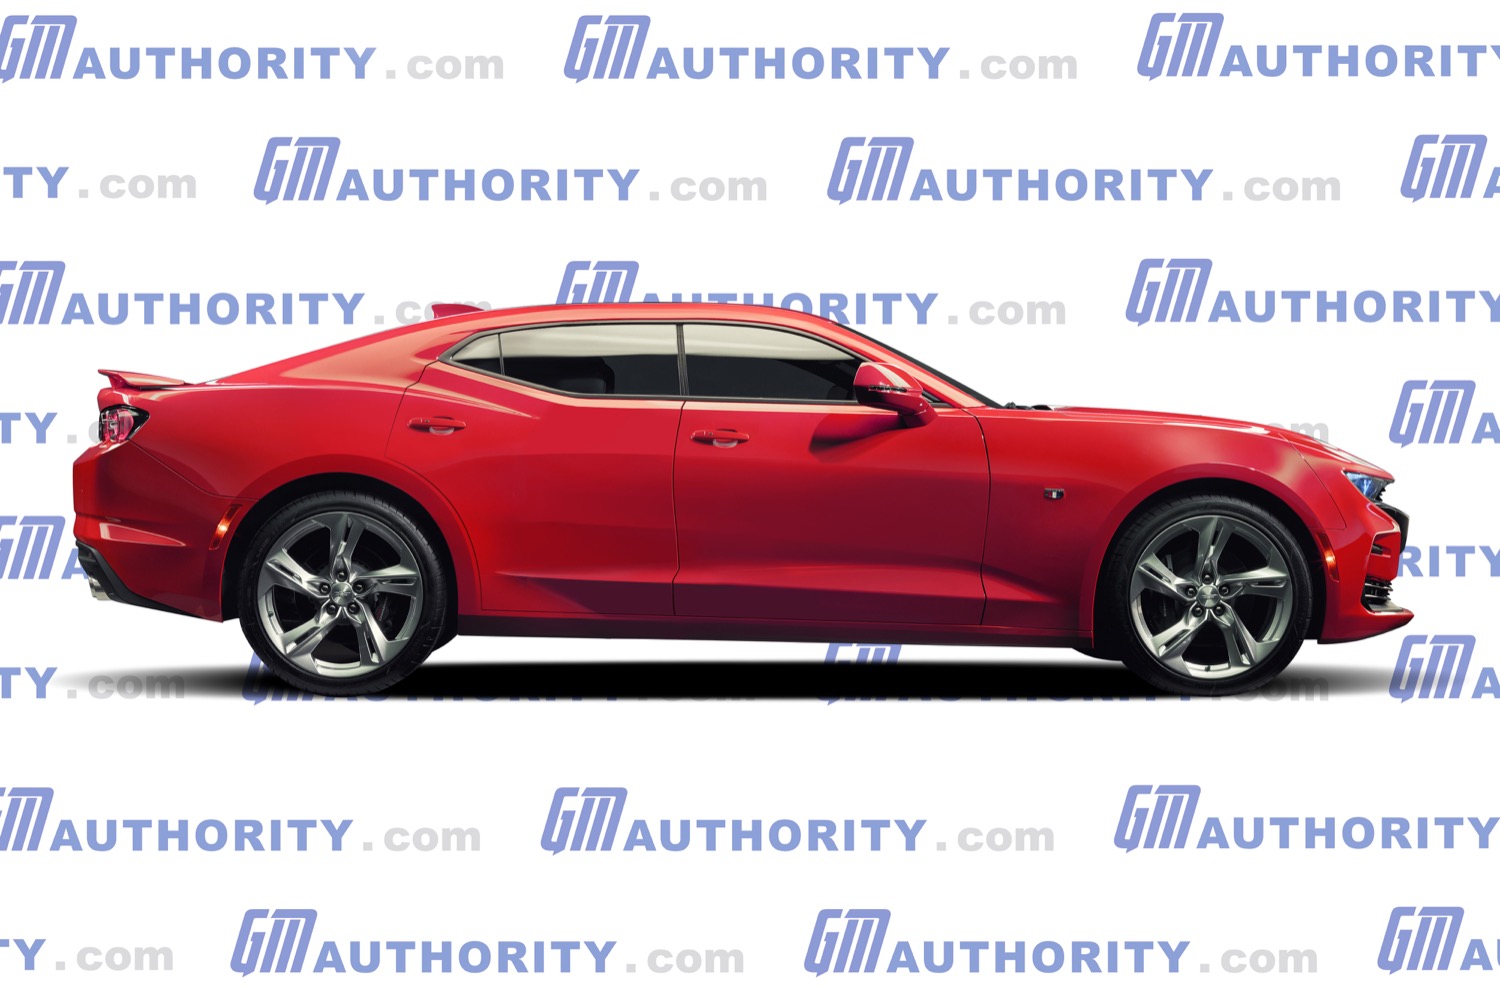 PIC] GM Authority Renders Corvette-Inspired SUV - Corvette: Sales, News &  Lifestyle